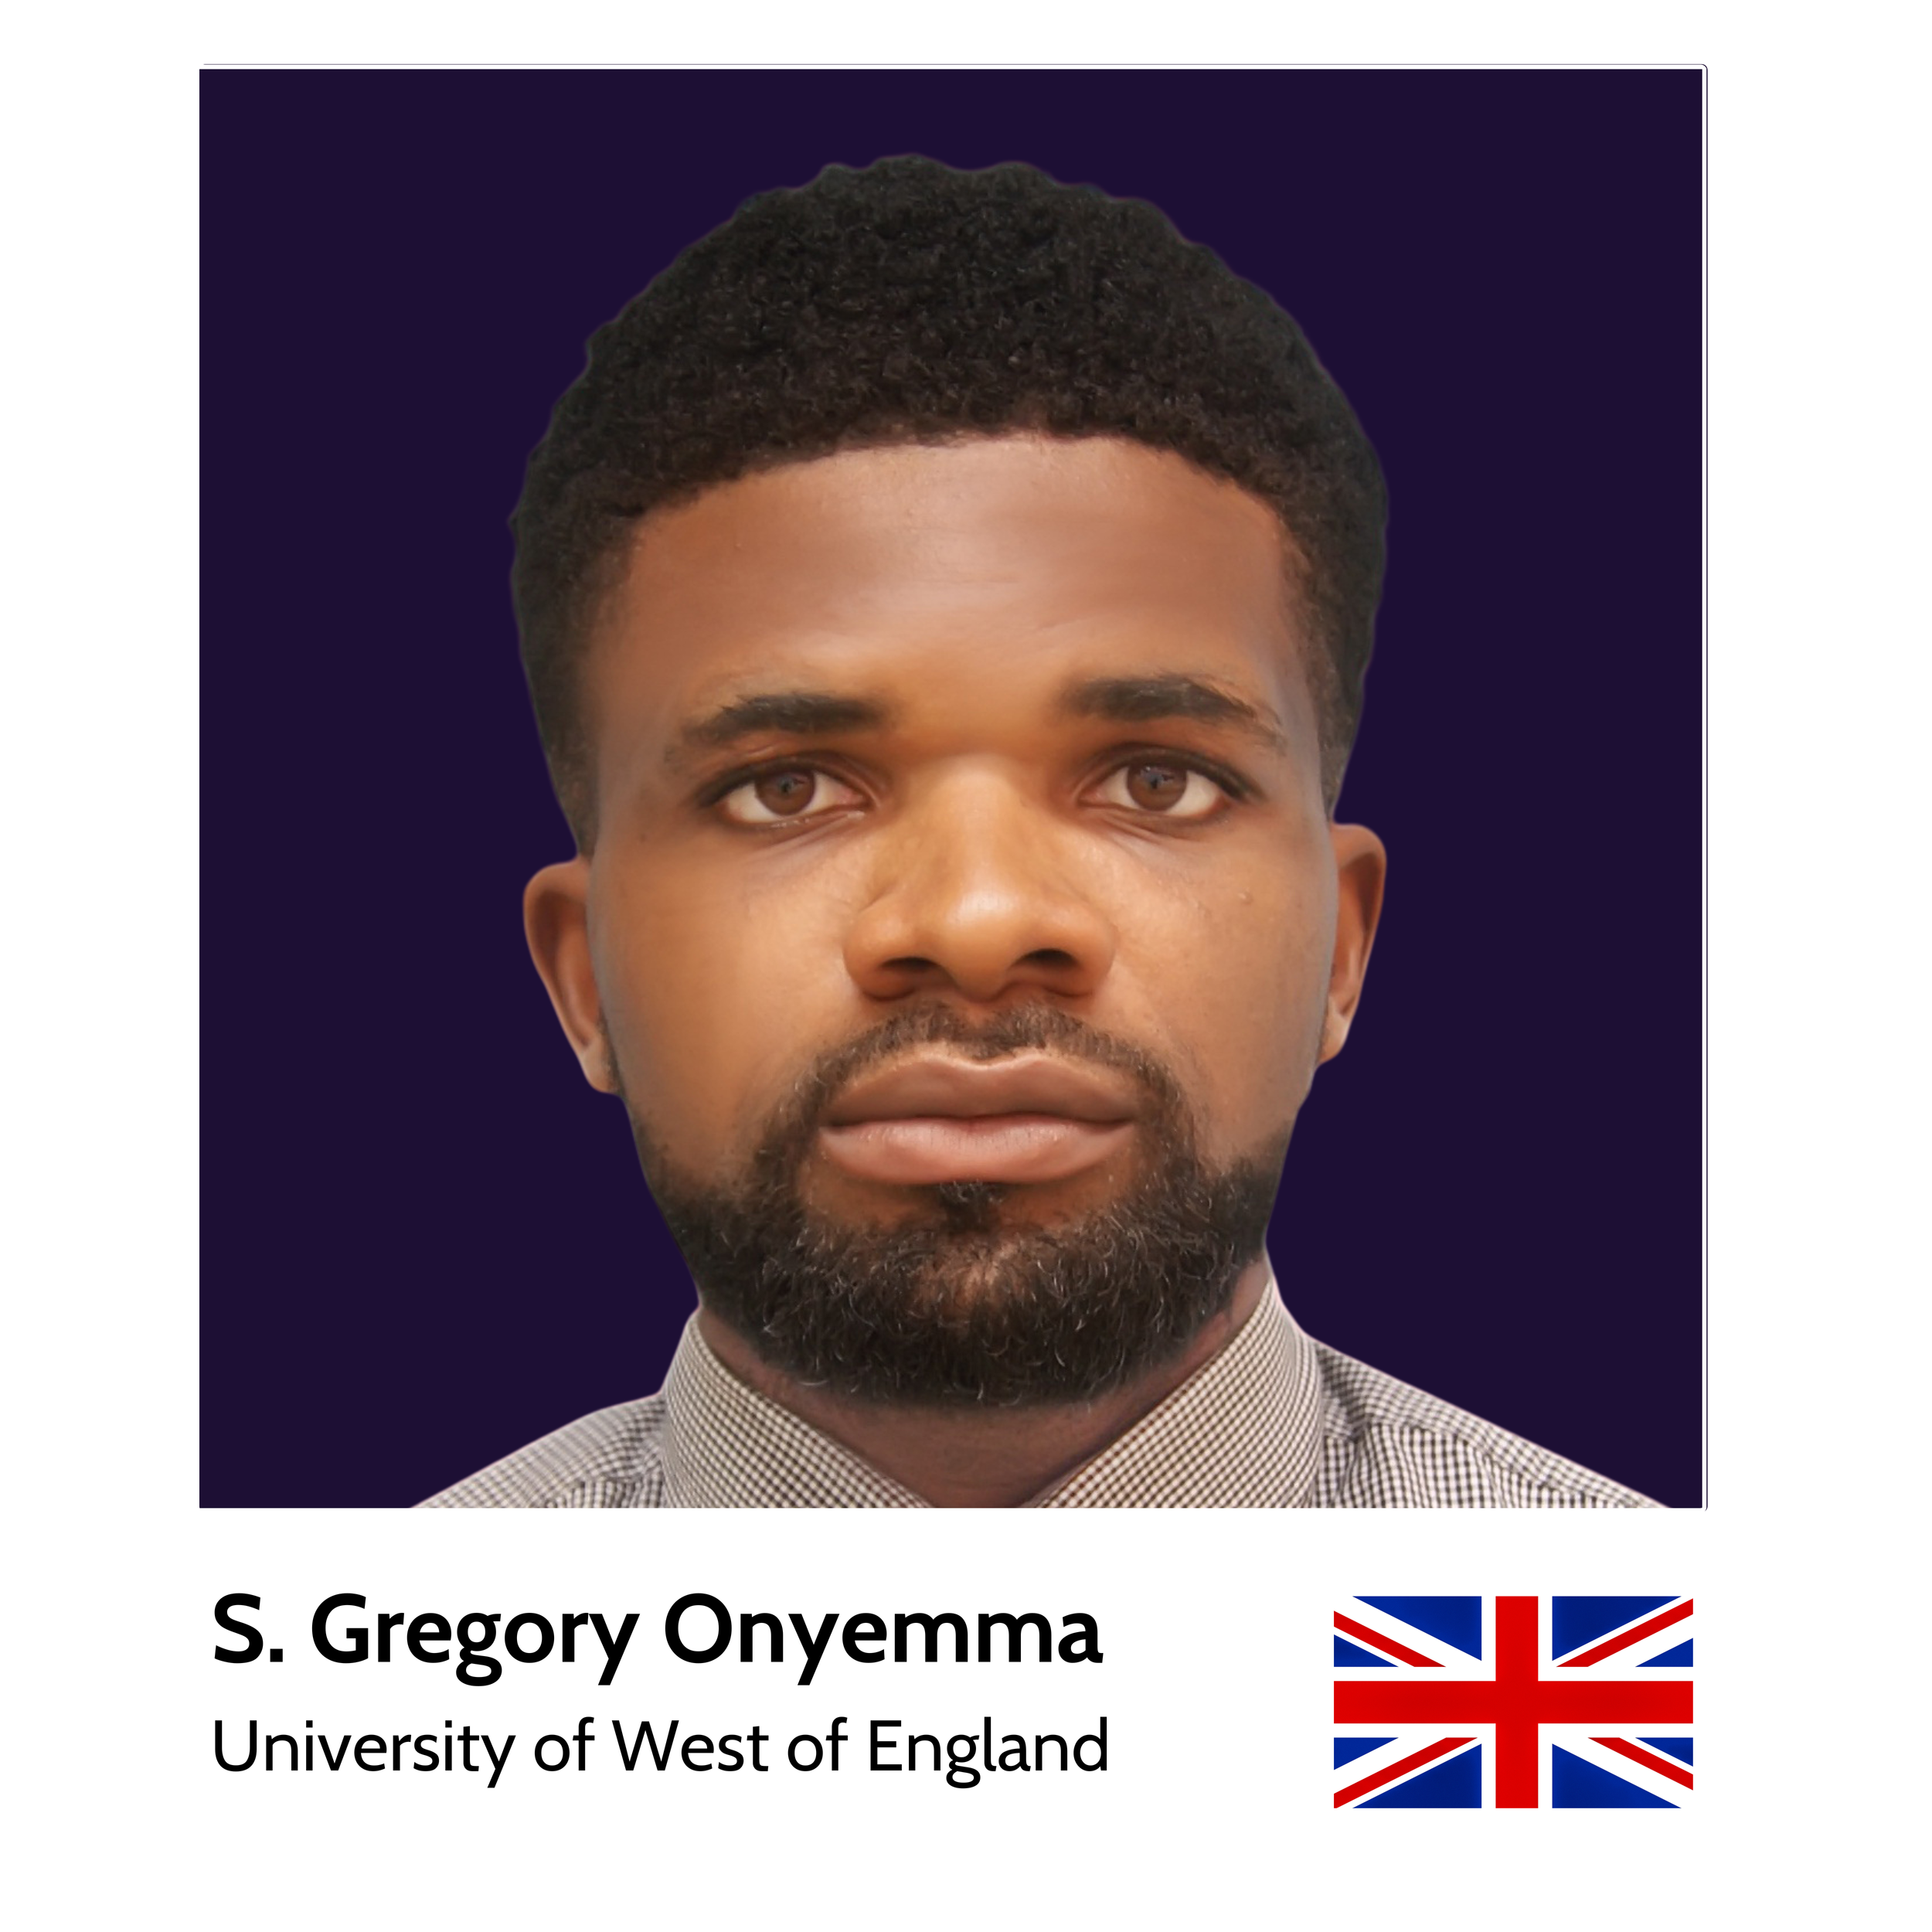 Your_Big_Year_ibm_zsystems_ambassador_Somtochukwu_Gregory_Onyemma_(Gregory)_University_of_West_of_England (1).png